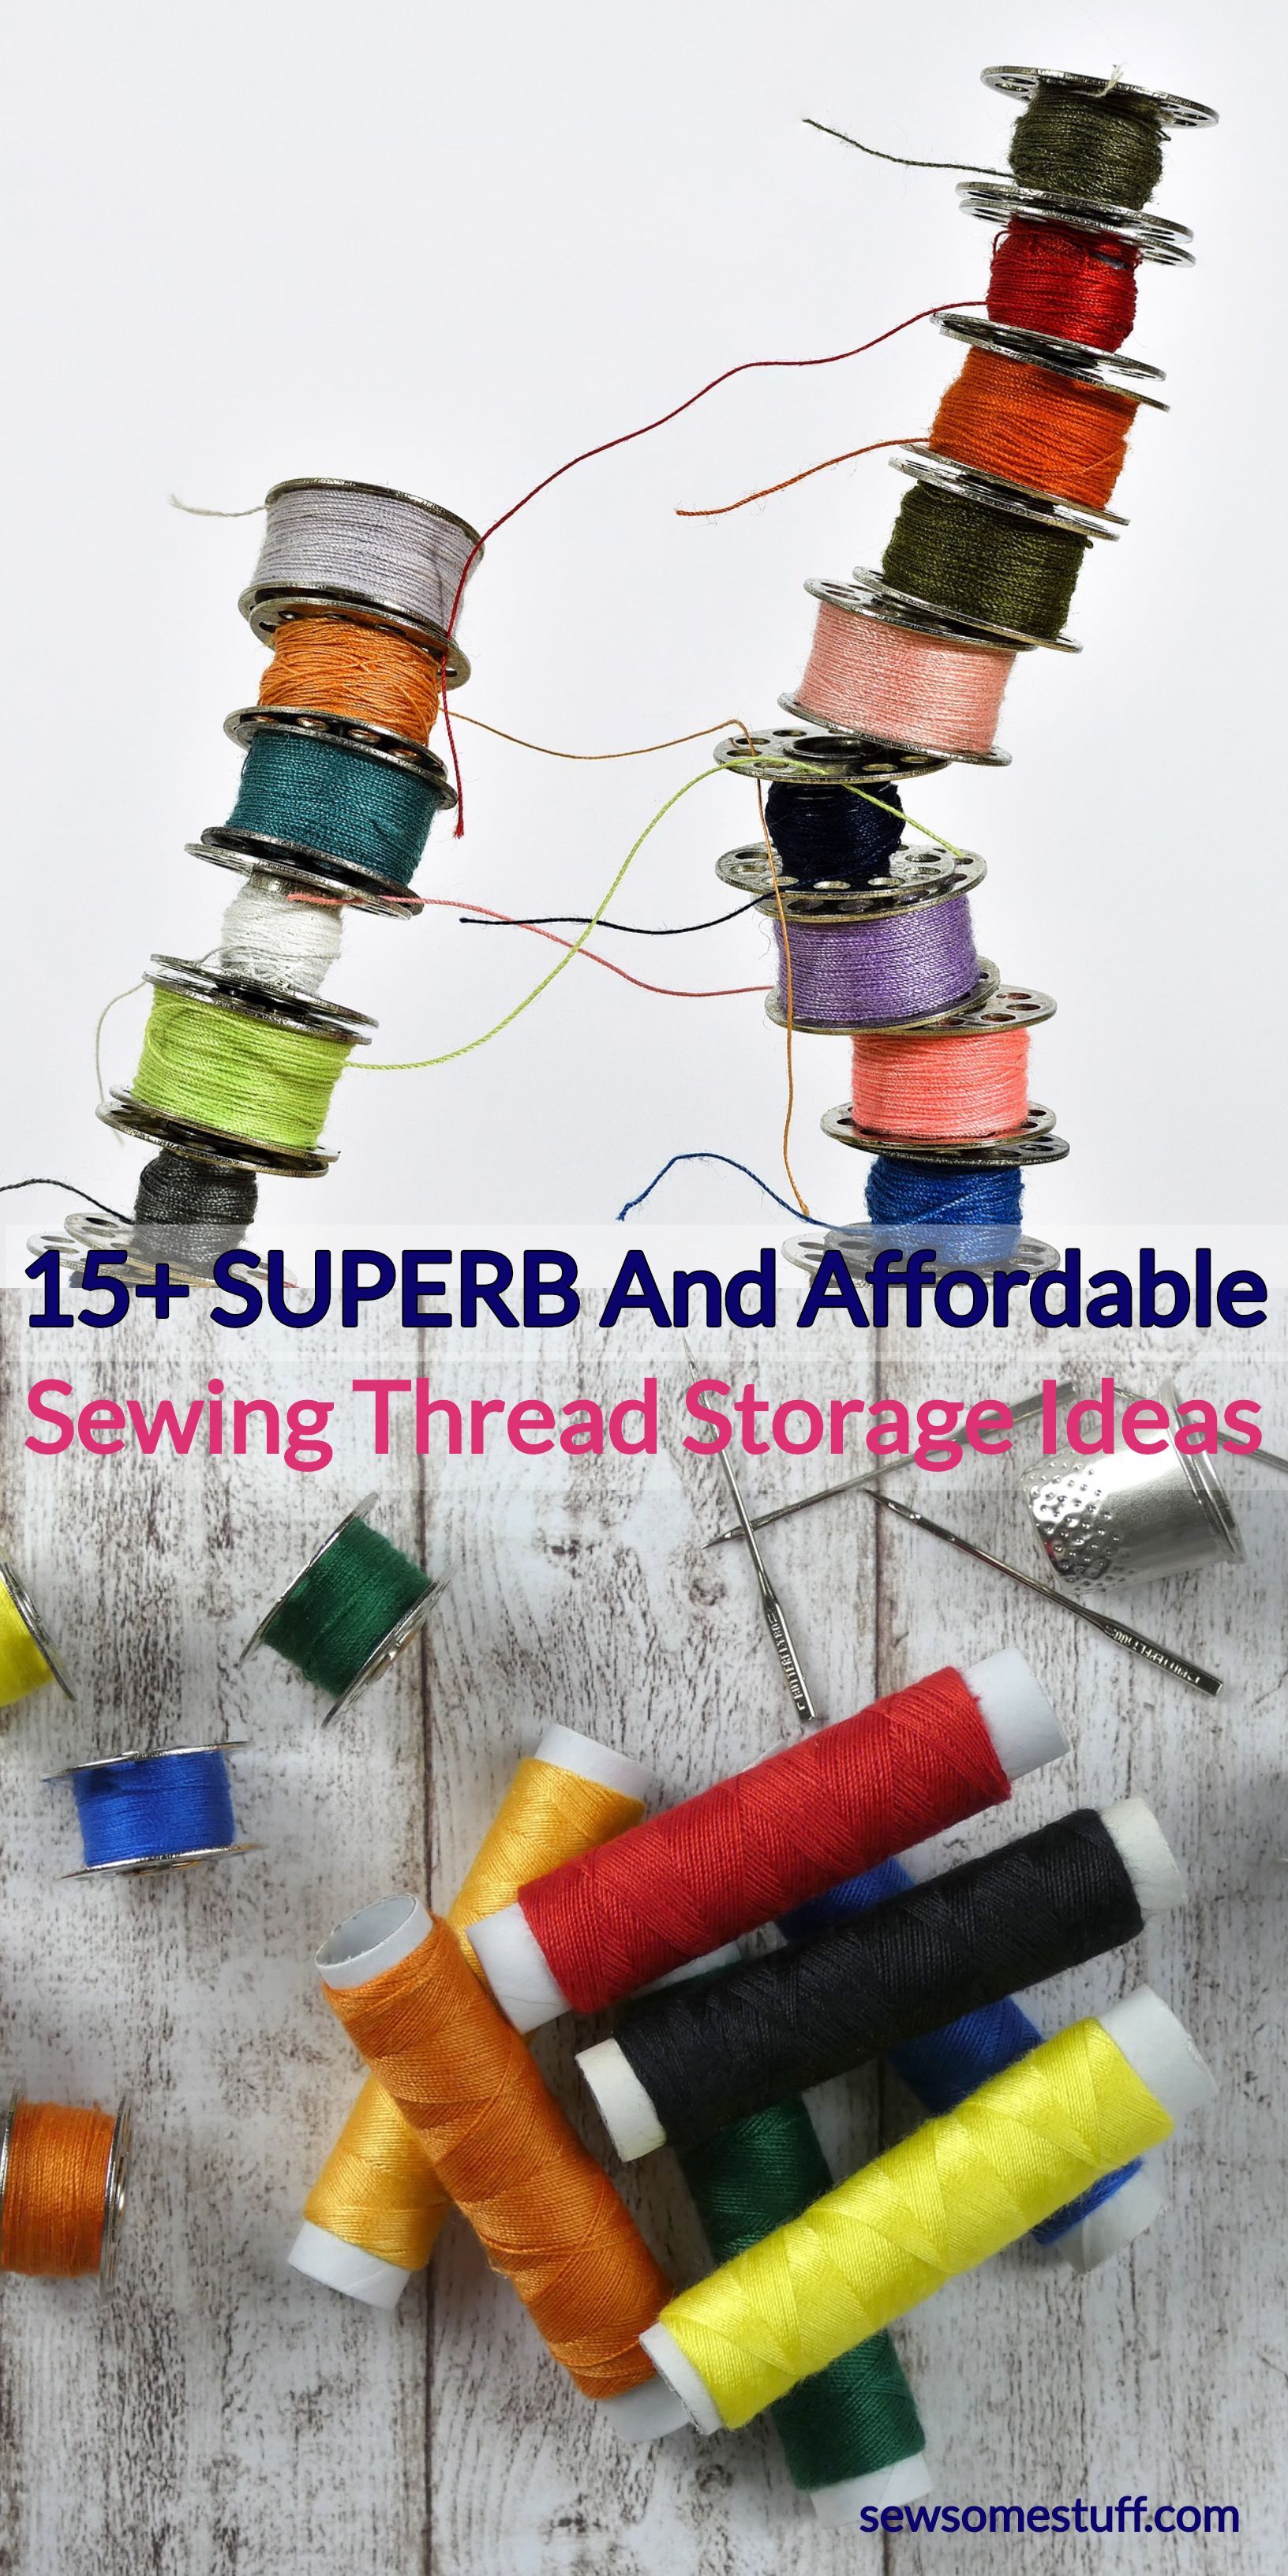 Kimations: Thread Storage  Sewing rooms, Bobbin storage, Sewing  organization